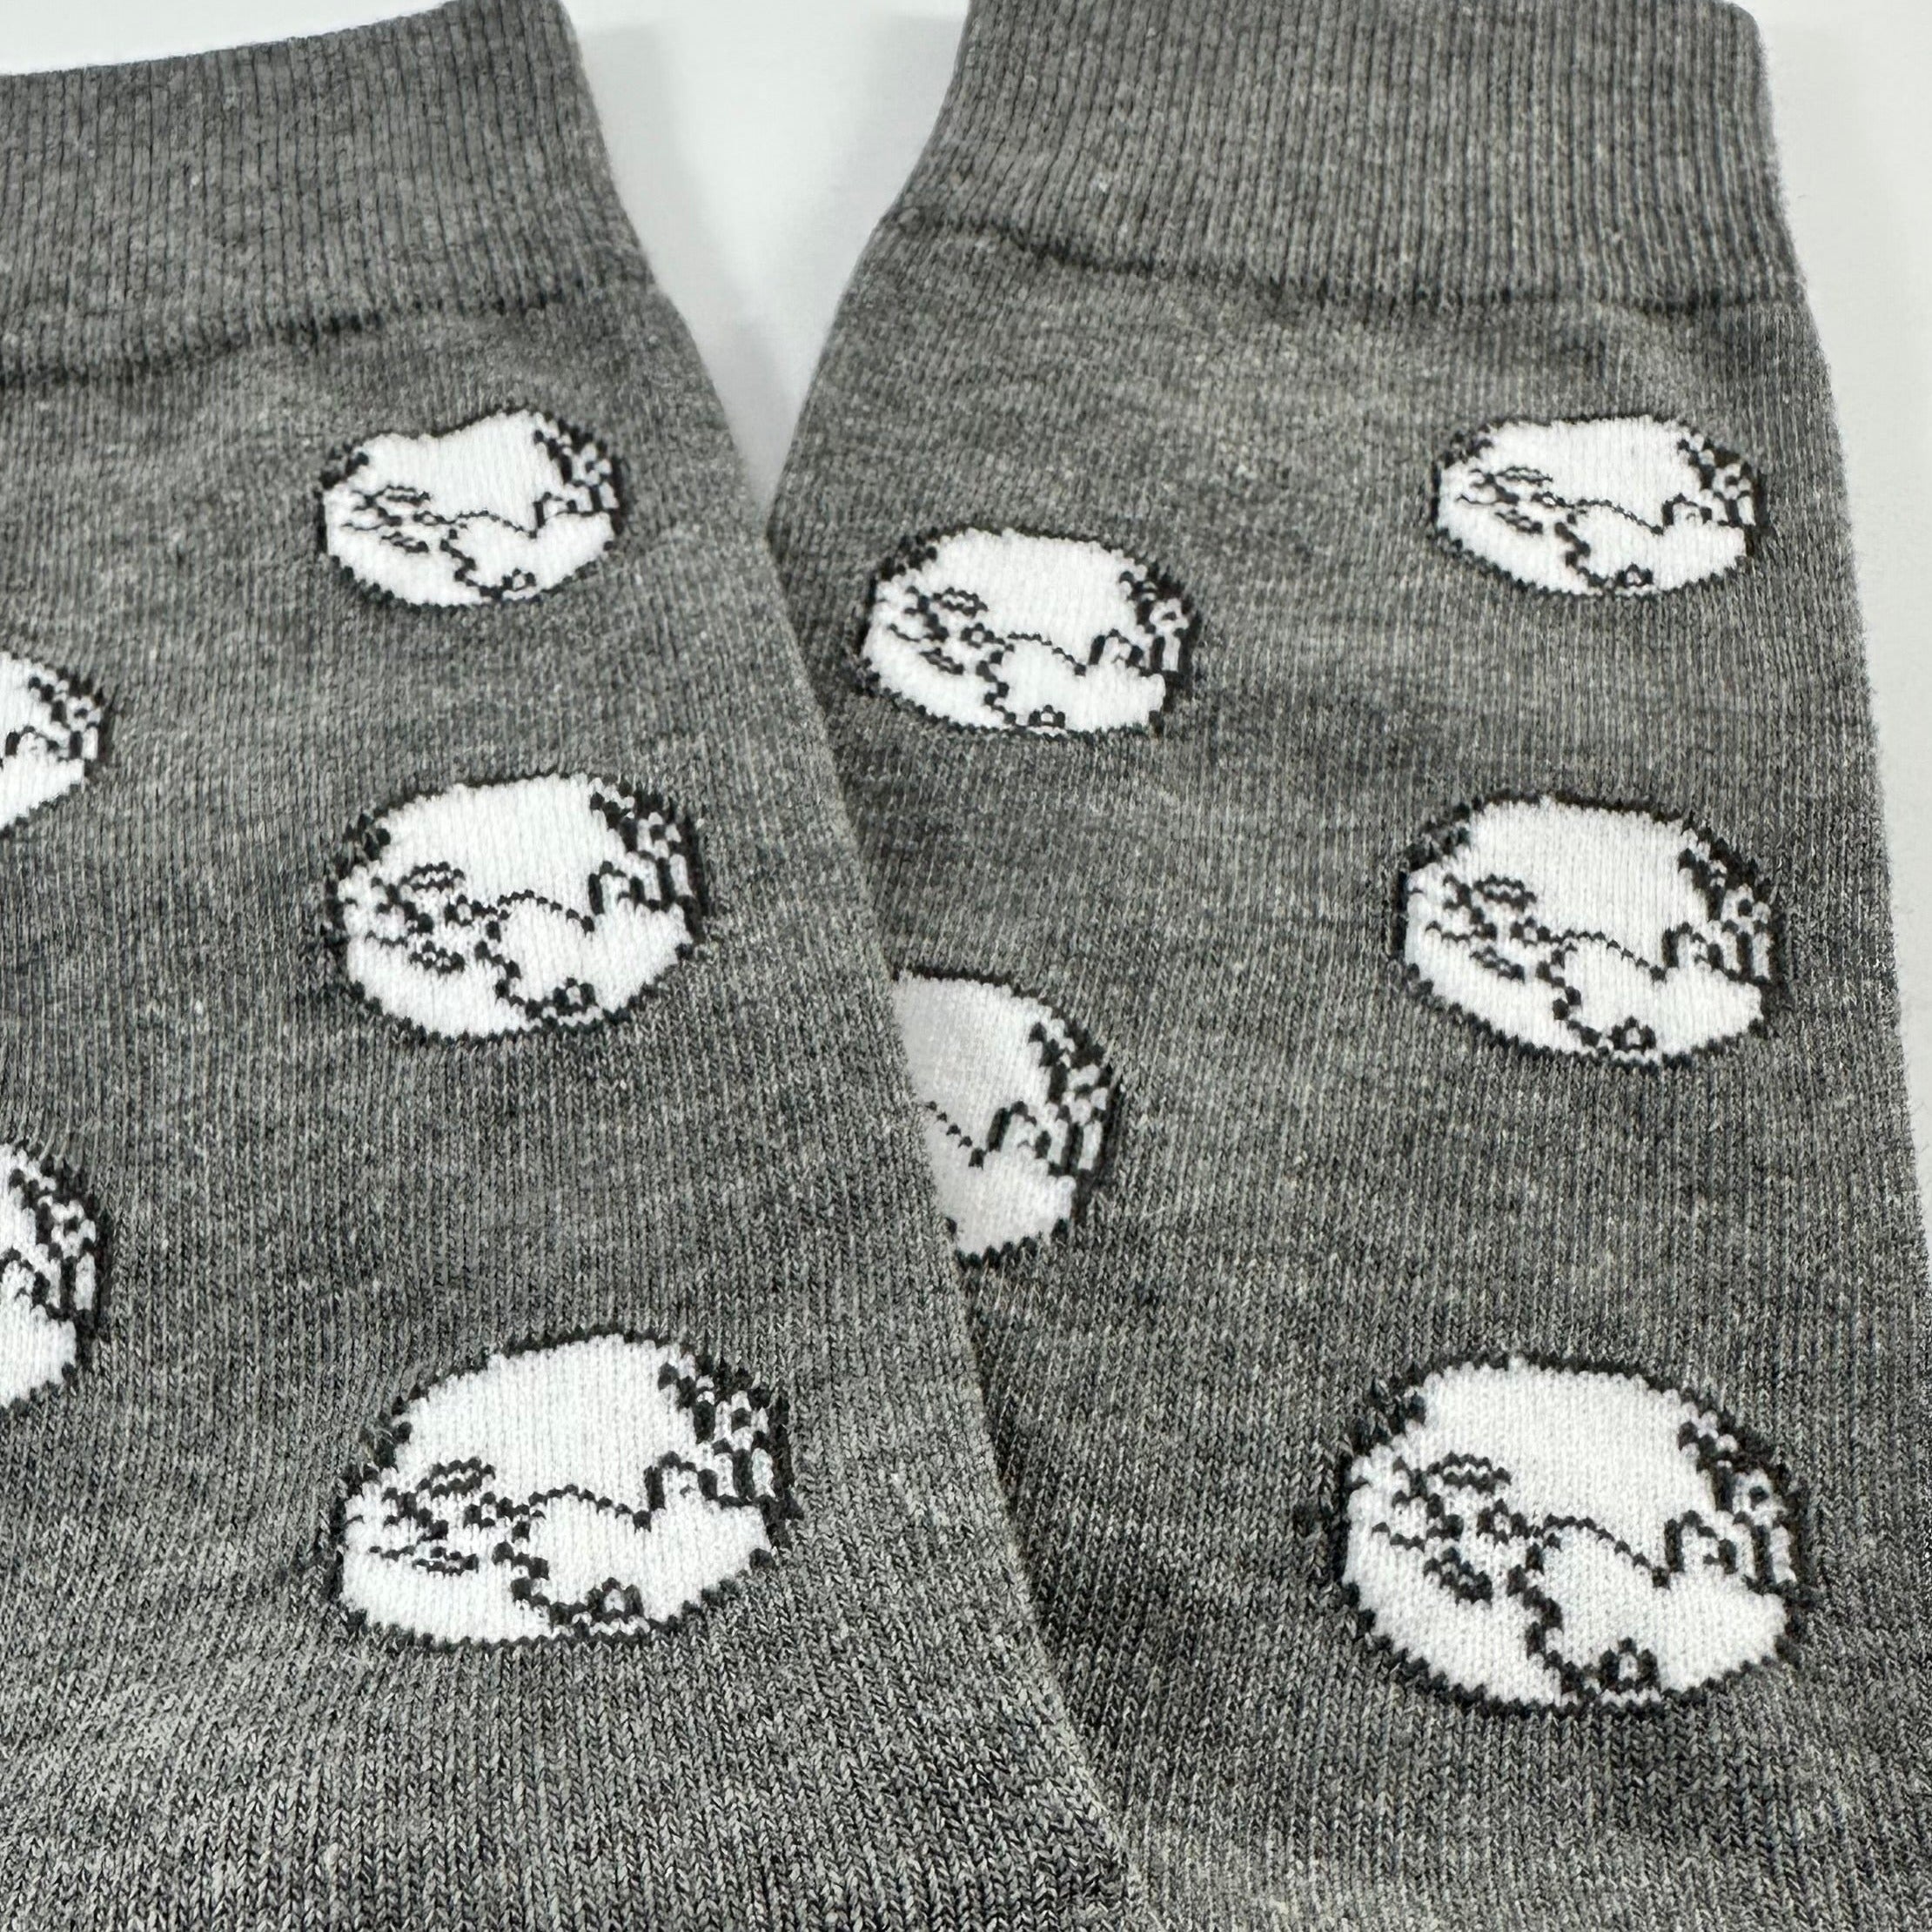 Earth Pattern Socks from the Sock Panda (Adult Large)